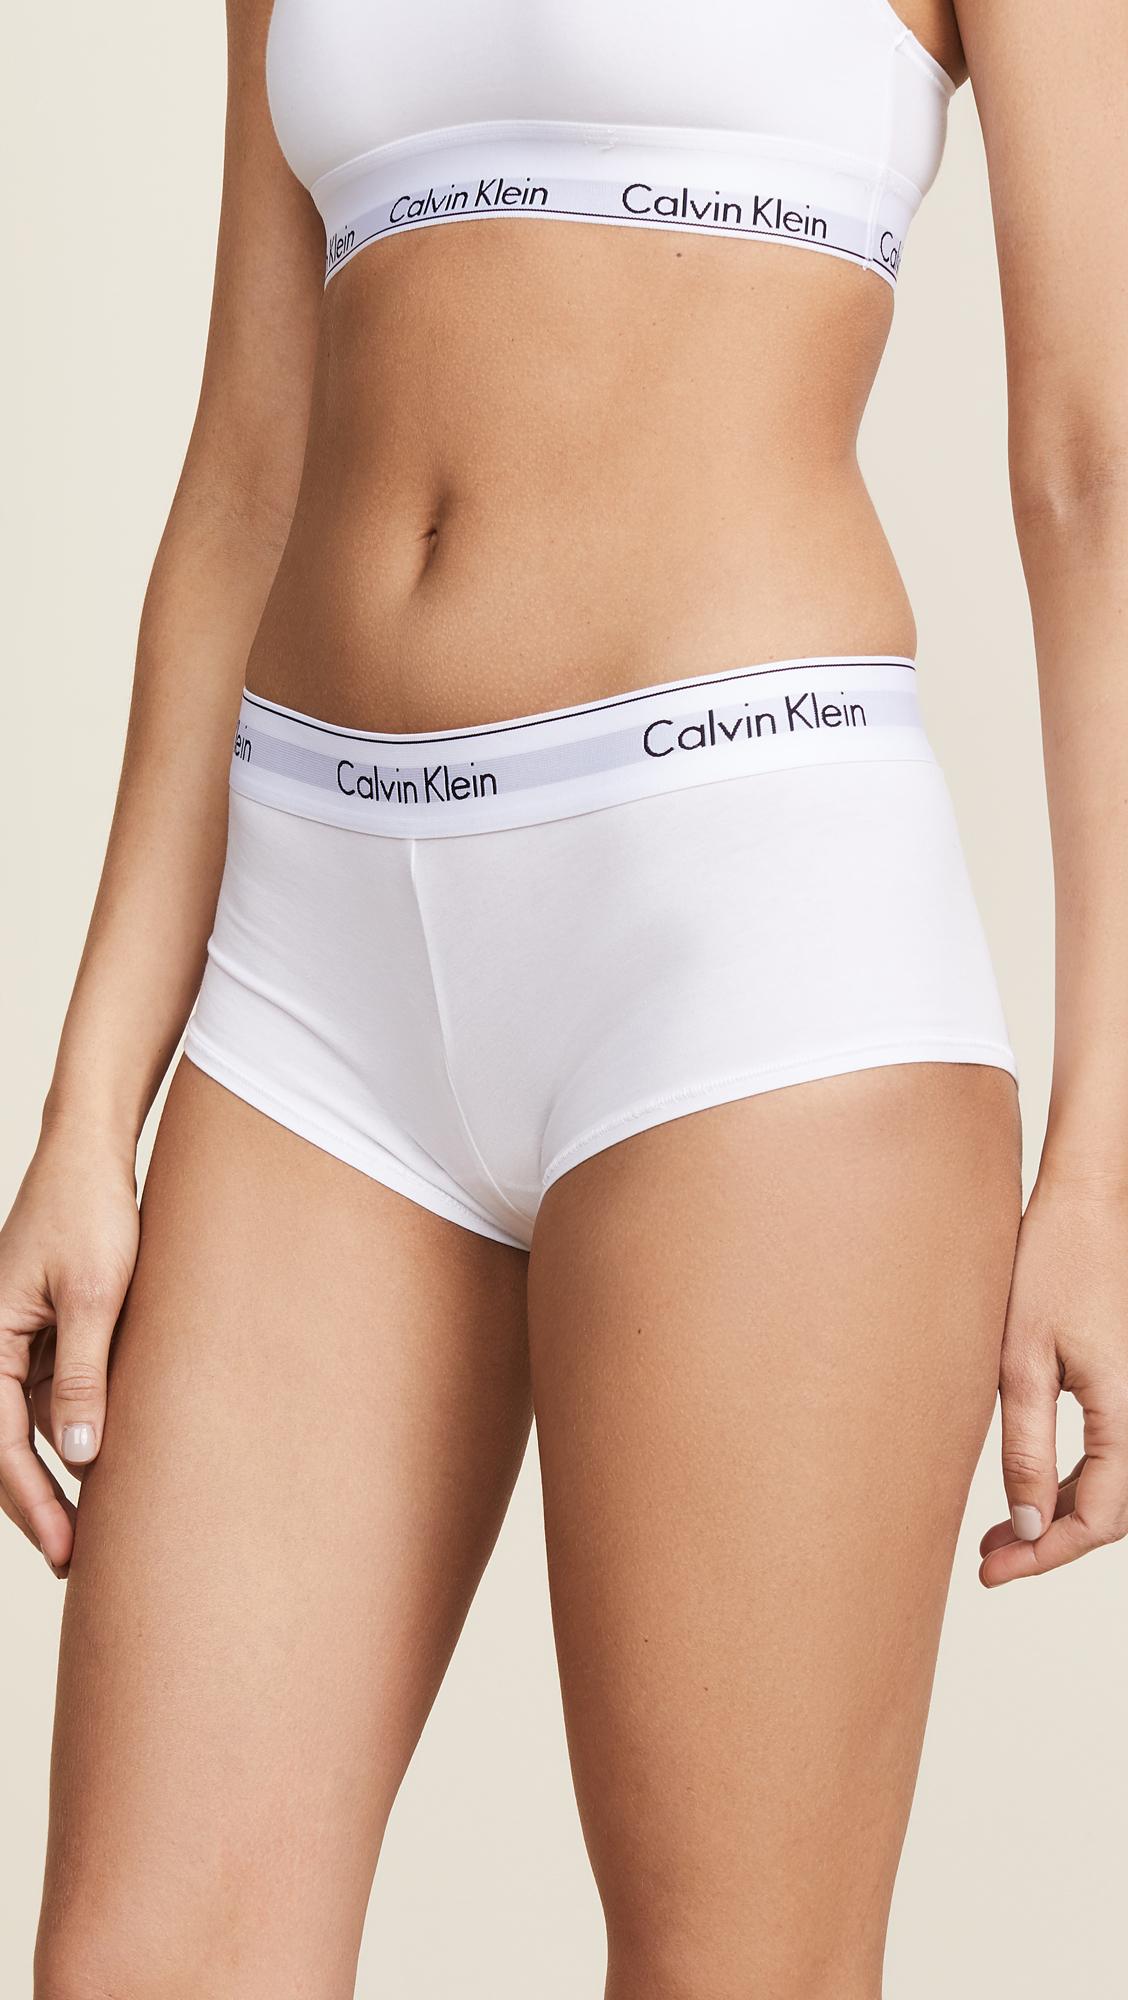 https://cdna.lystit.com/photos/shopbop/dc9a13ae/calvin-klein-White-Modern-Cotton-Boy-Shorts.jpeg